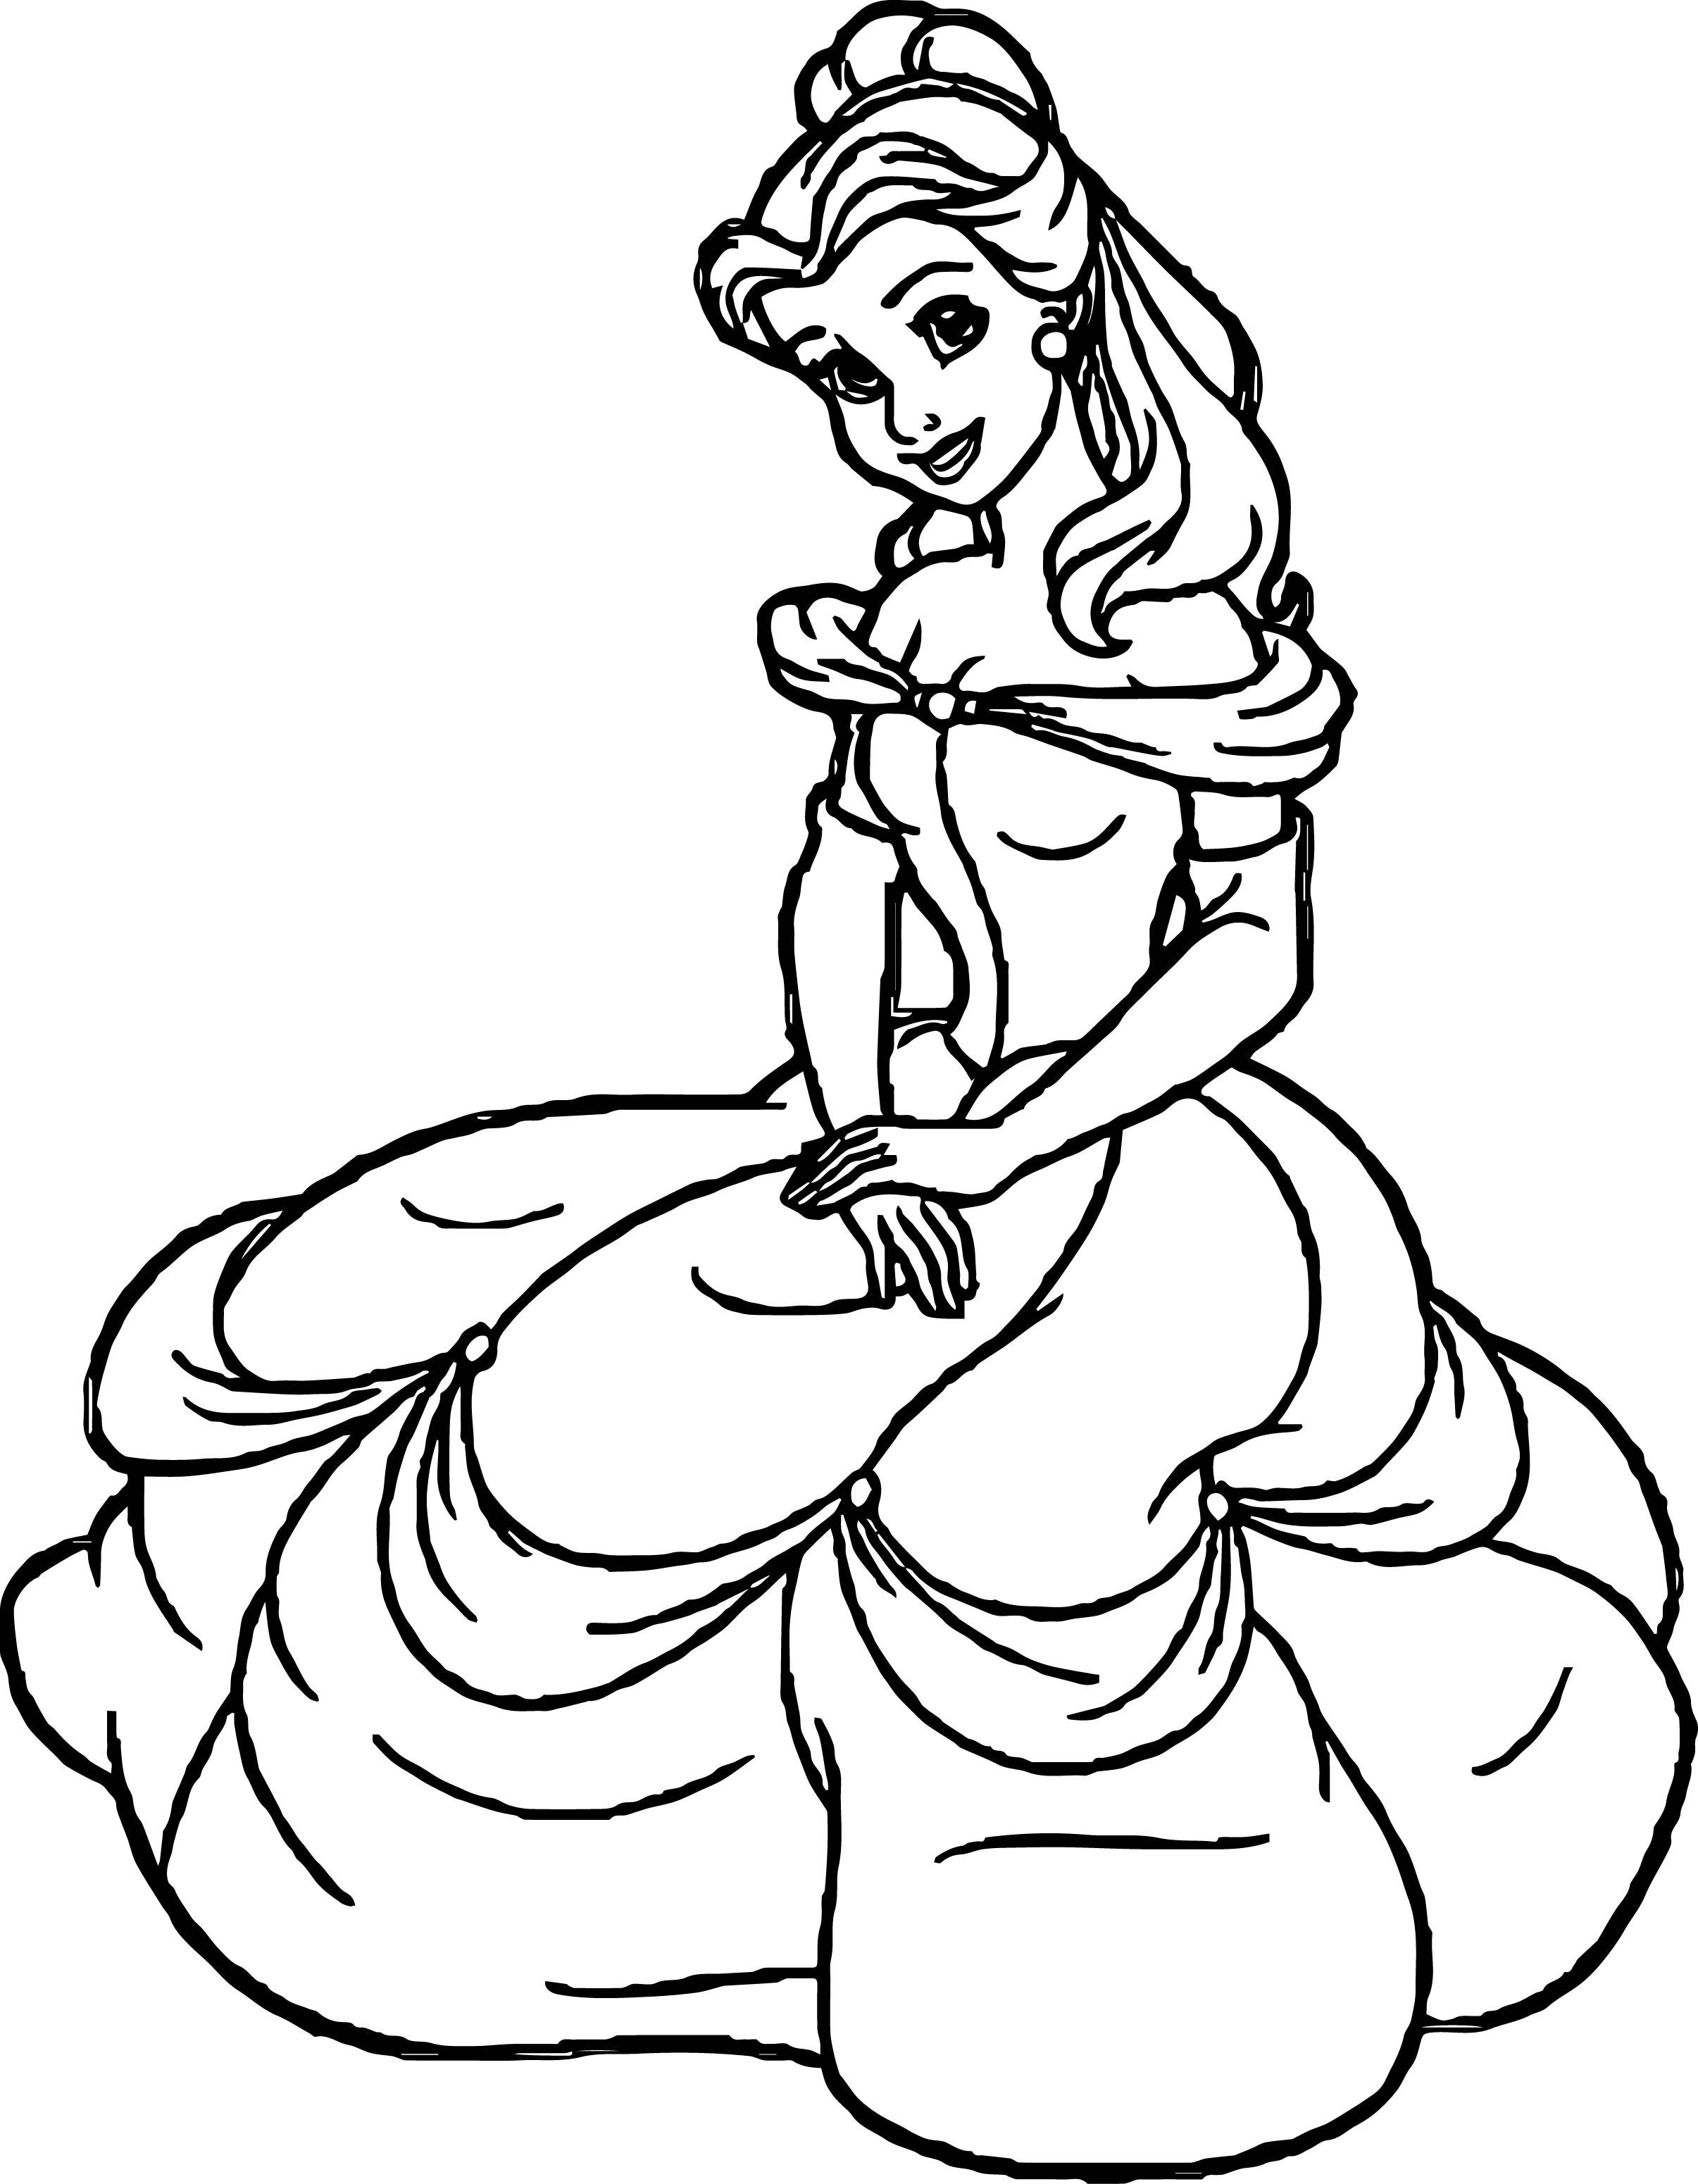 Disney Princess Coloring Pages Easy - BubaKids.com